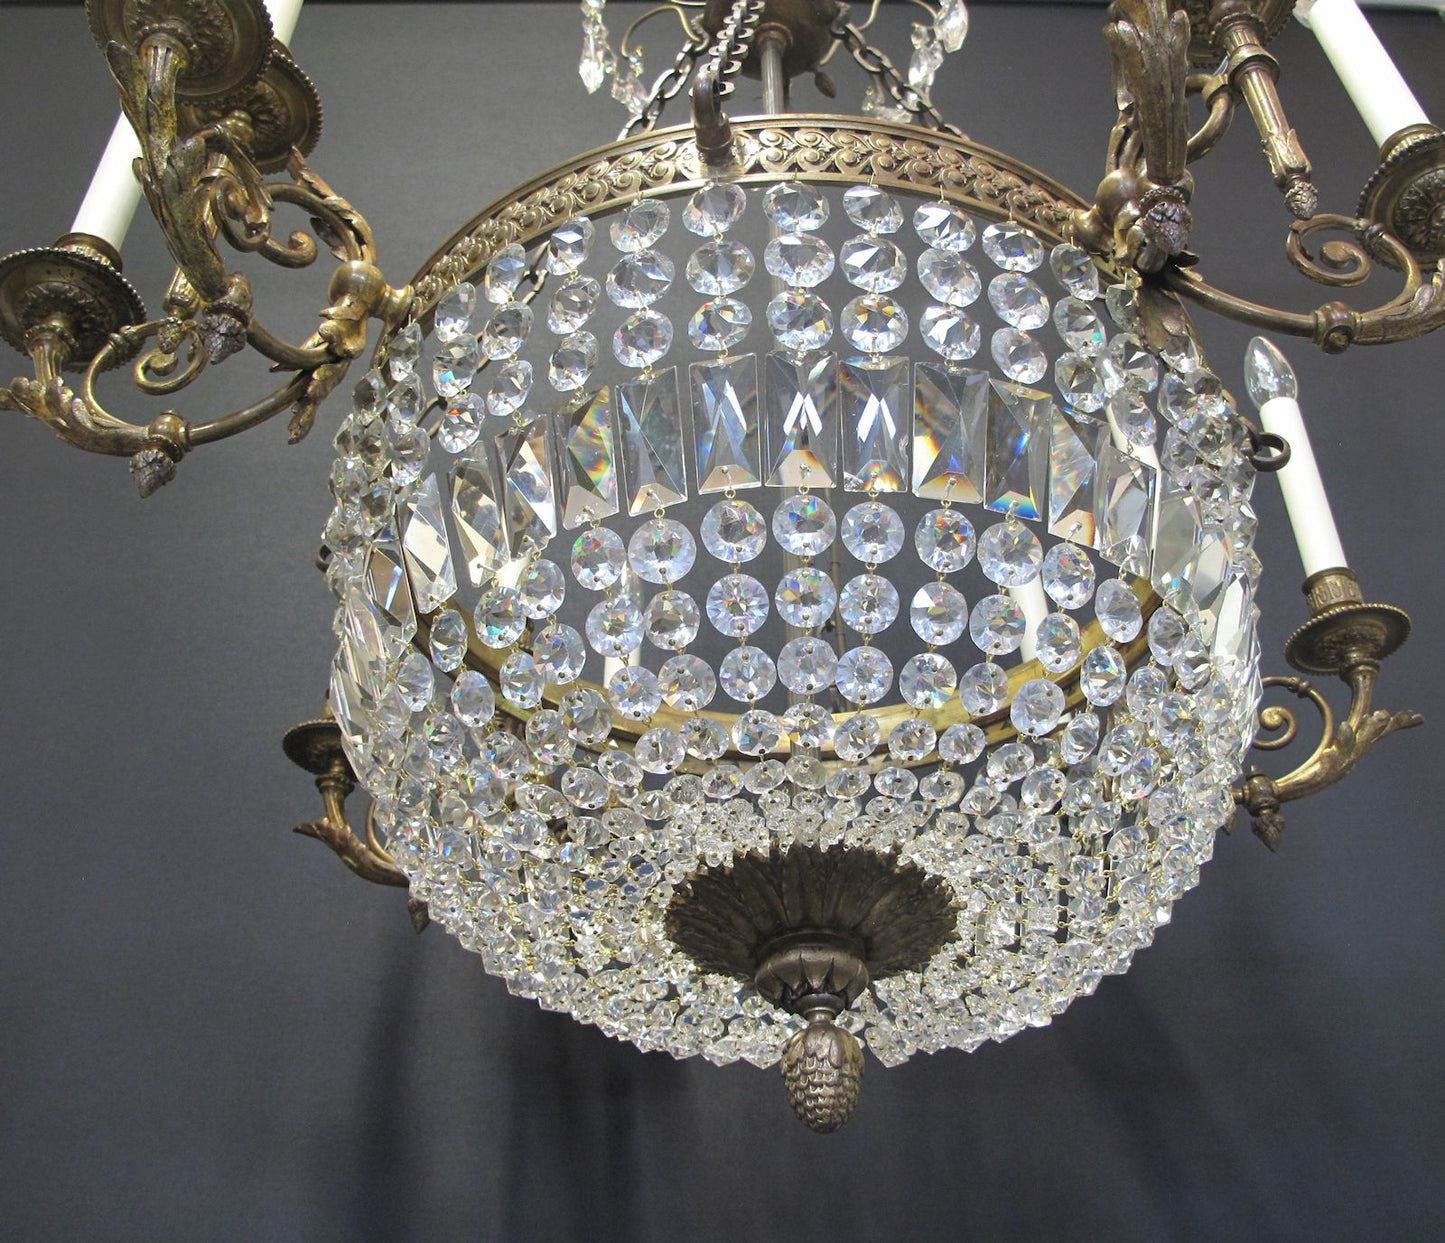 12 light ormolu and glass chandelier, bottom bag